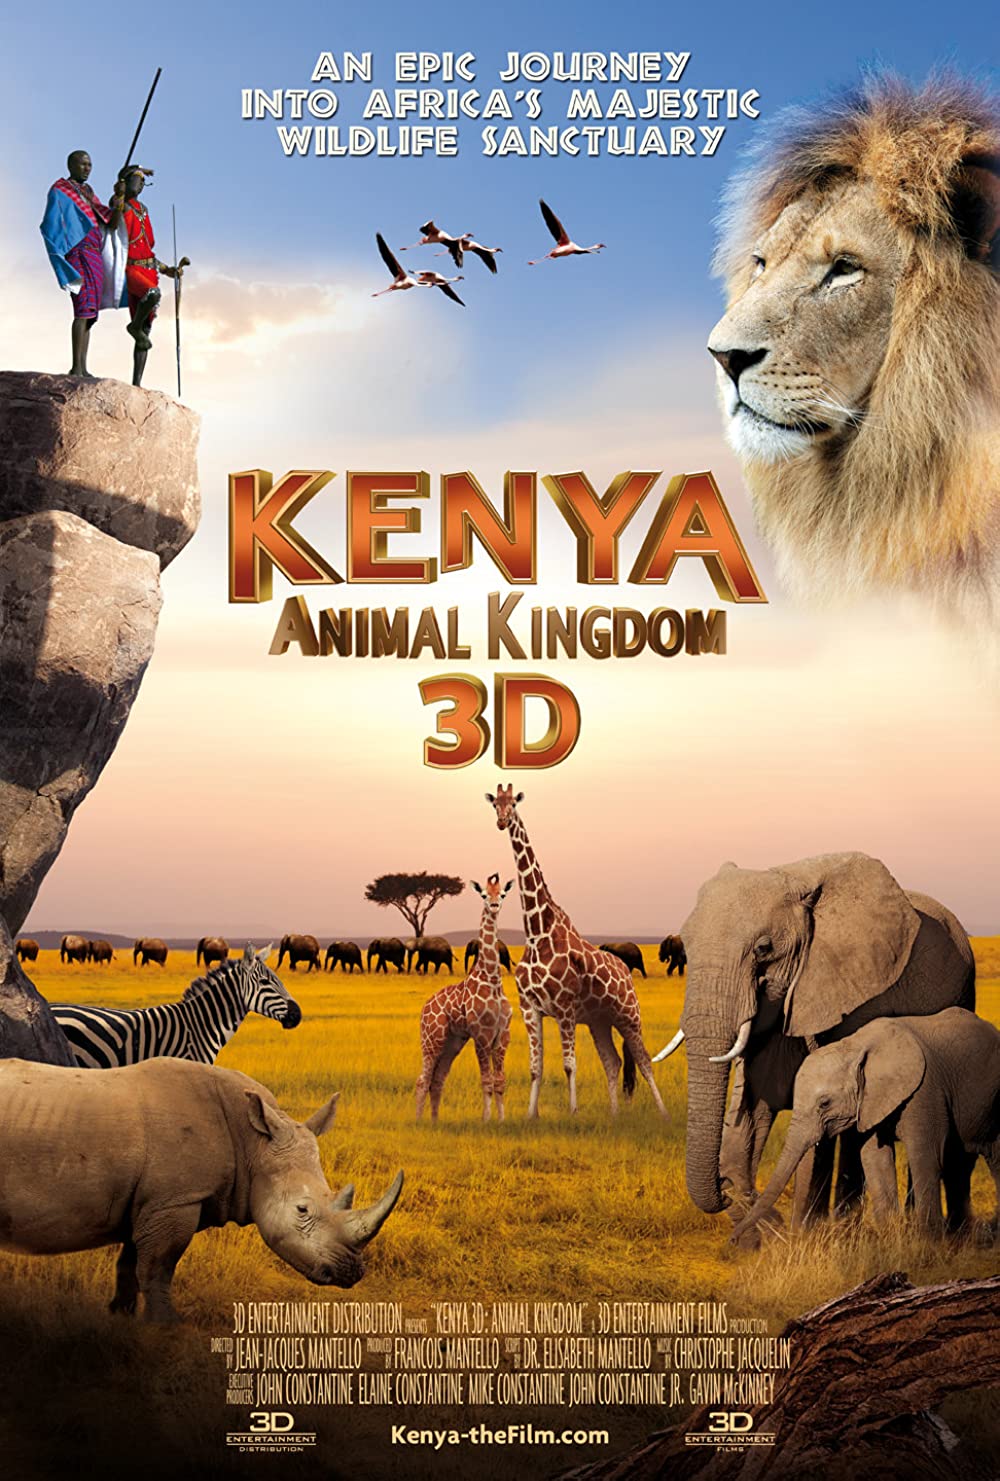 Filmbeschreibung zu Kenya 3D: Animal Kingdom